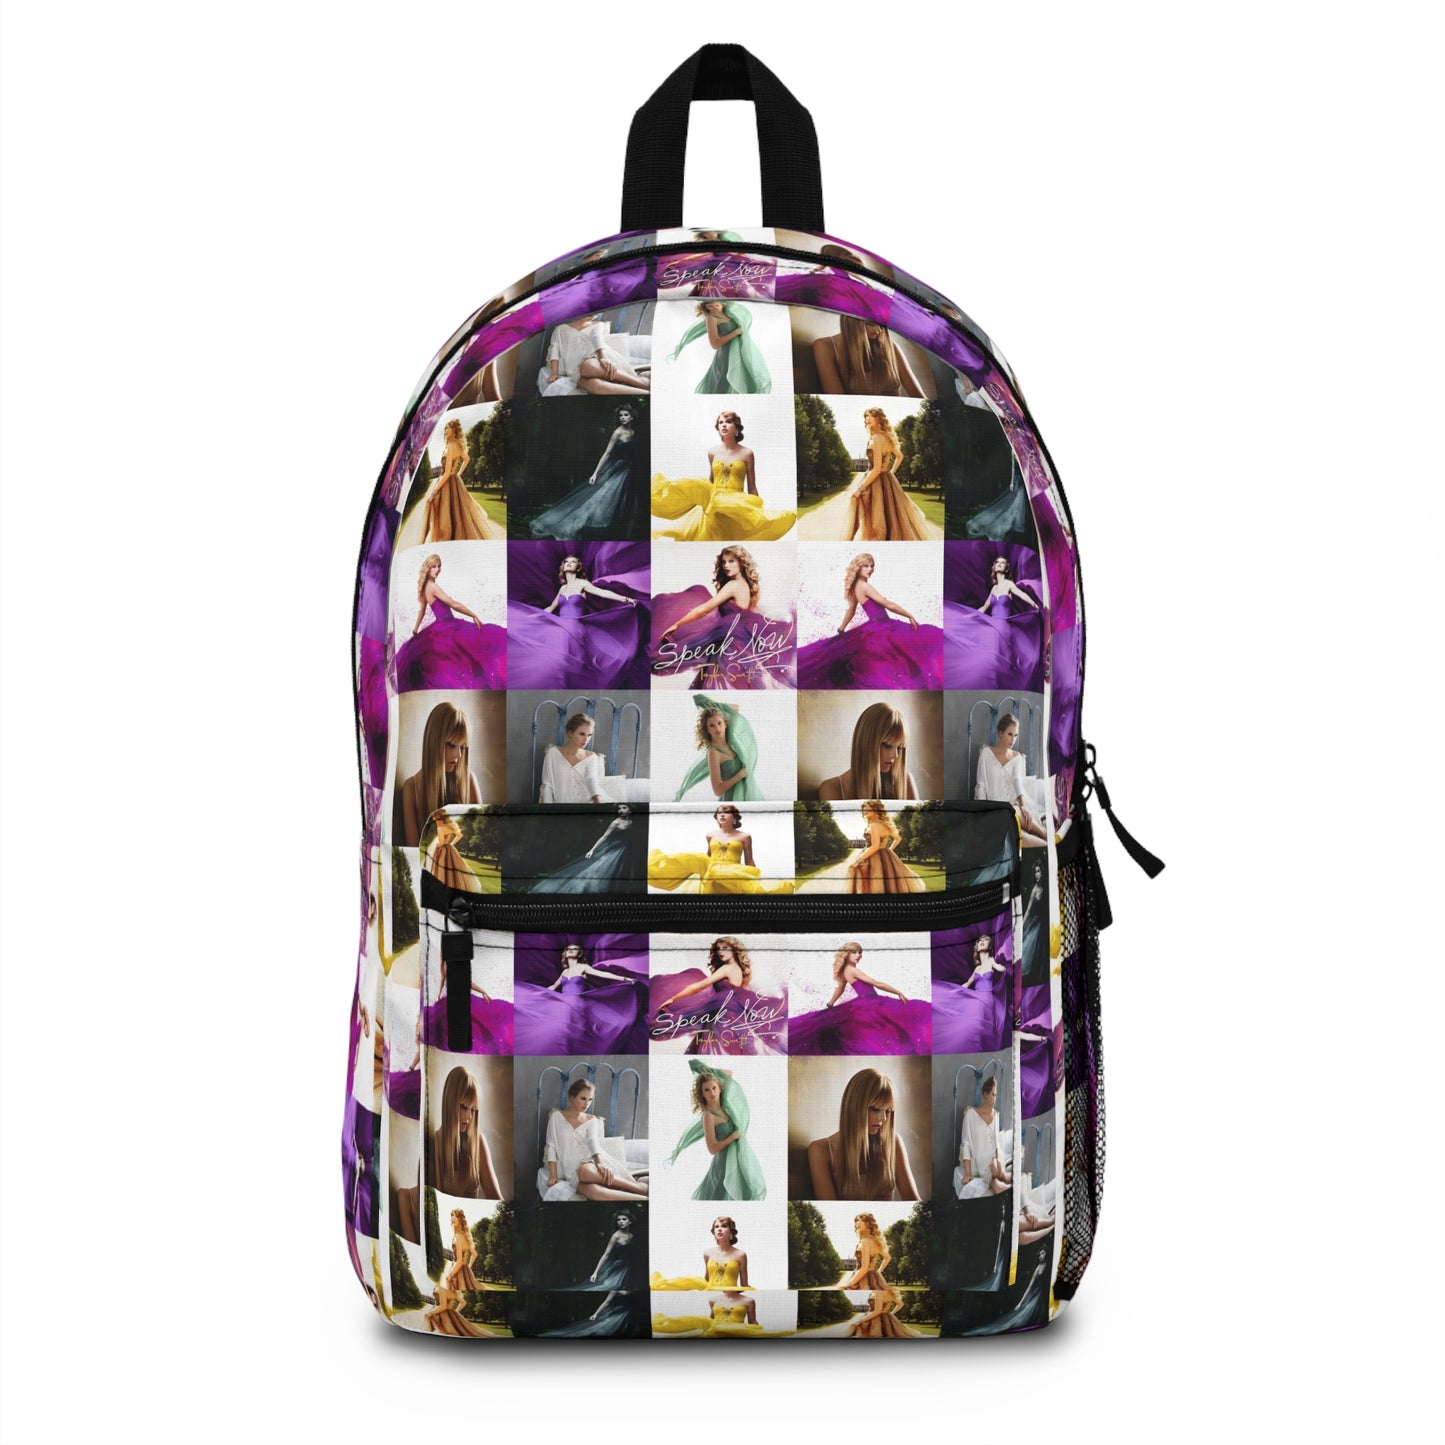 Taylor Swift Speak Now Mosaic Backpack